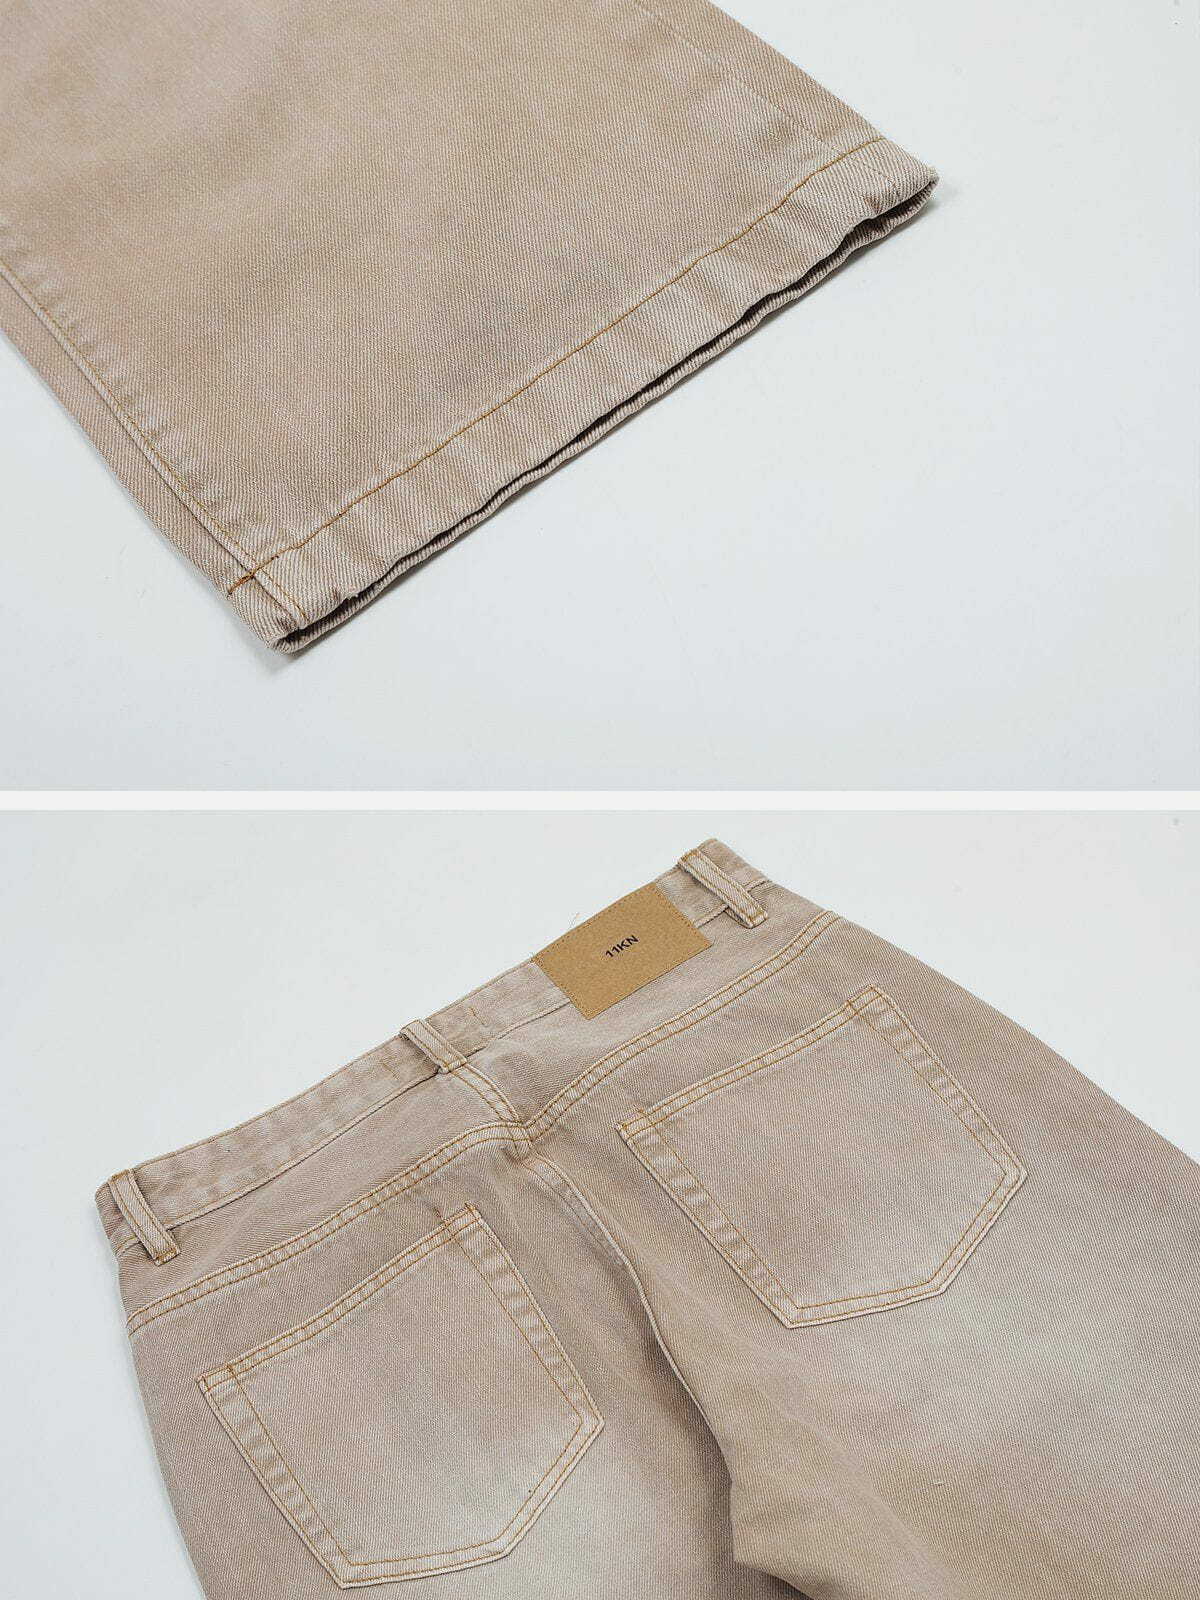 wrinkled washed jeans edgy & urban denim 3479